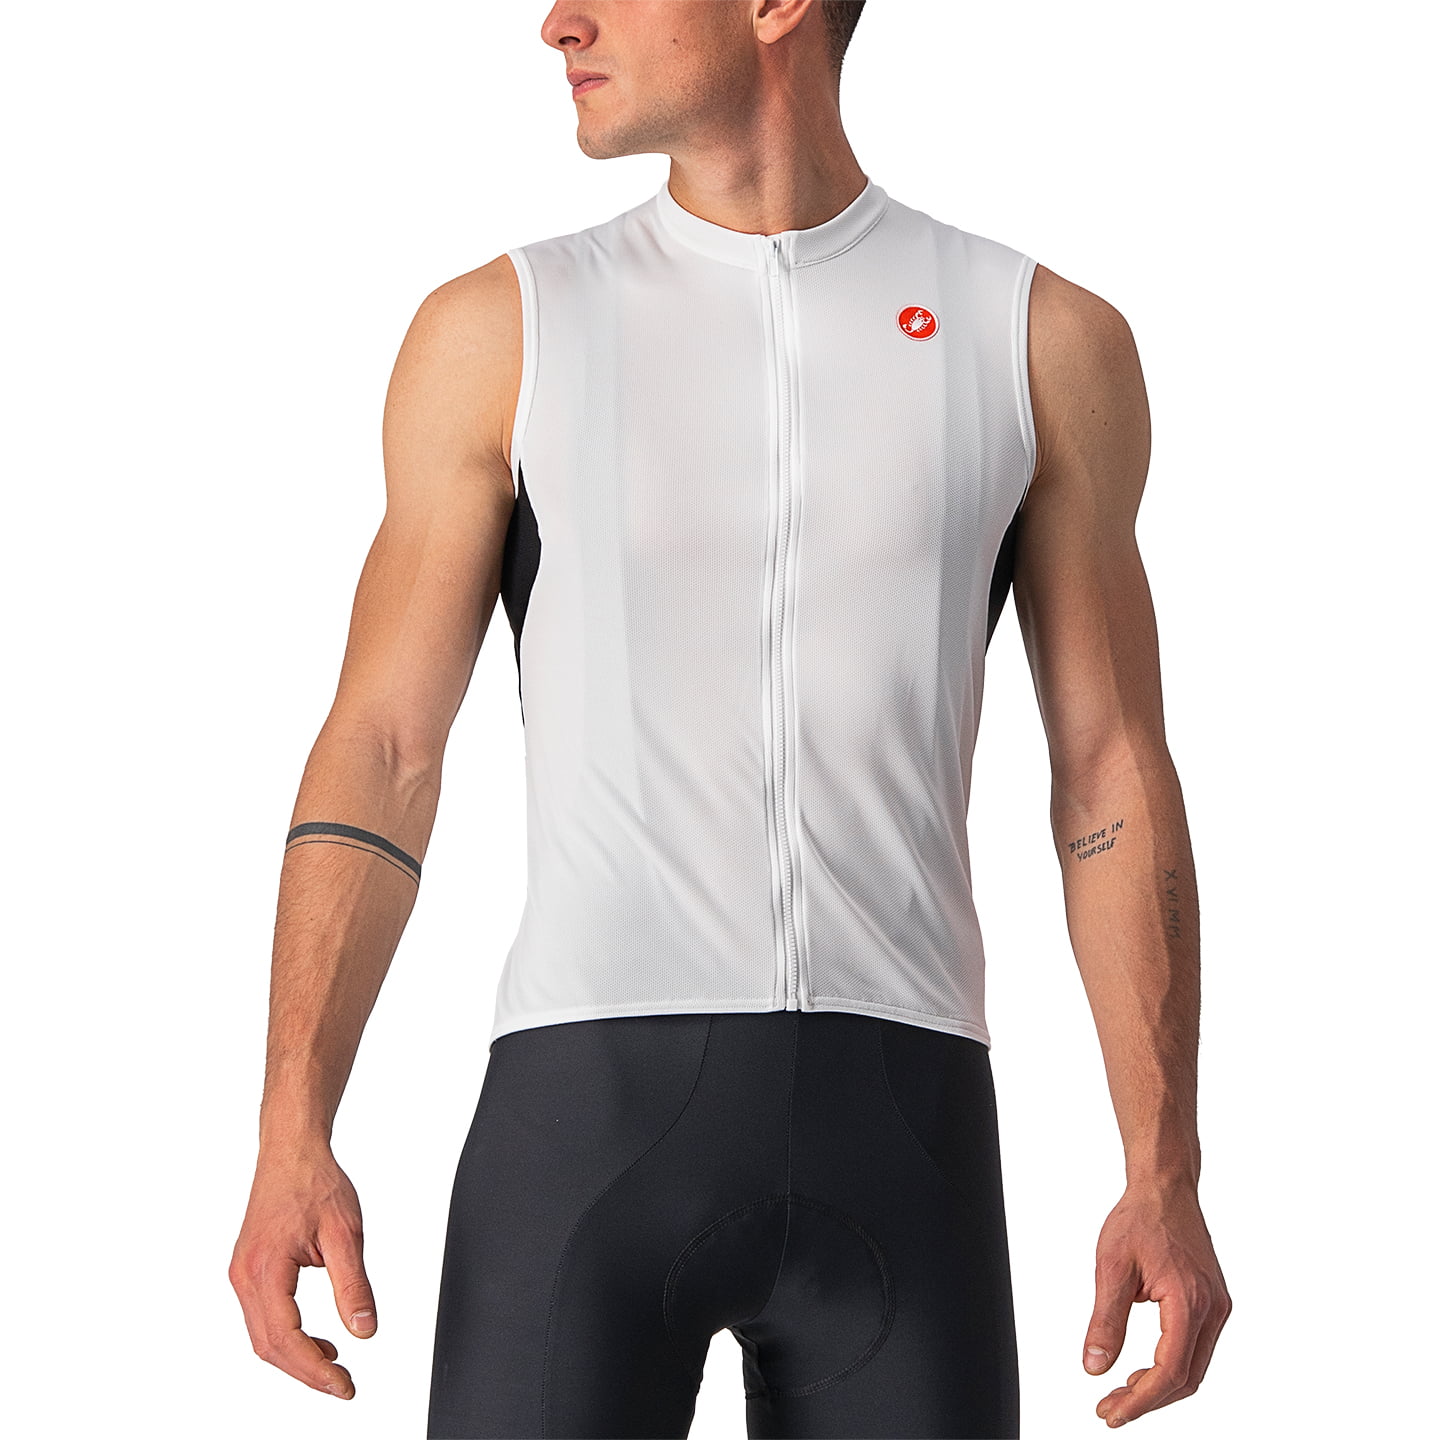 Entrata VI Sleeveless Cycling Jersey Sleeveless Jersey, for men, size 2XL, Cycling jersey, Cycle clothing